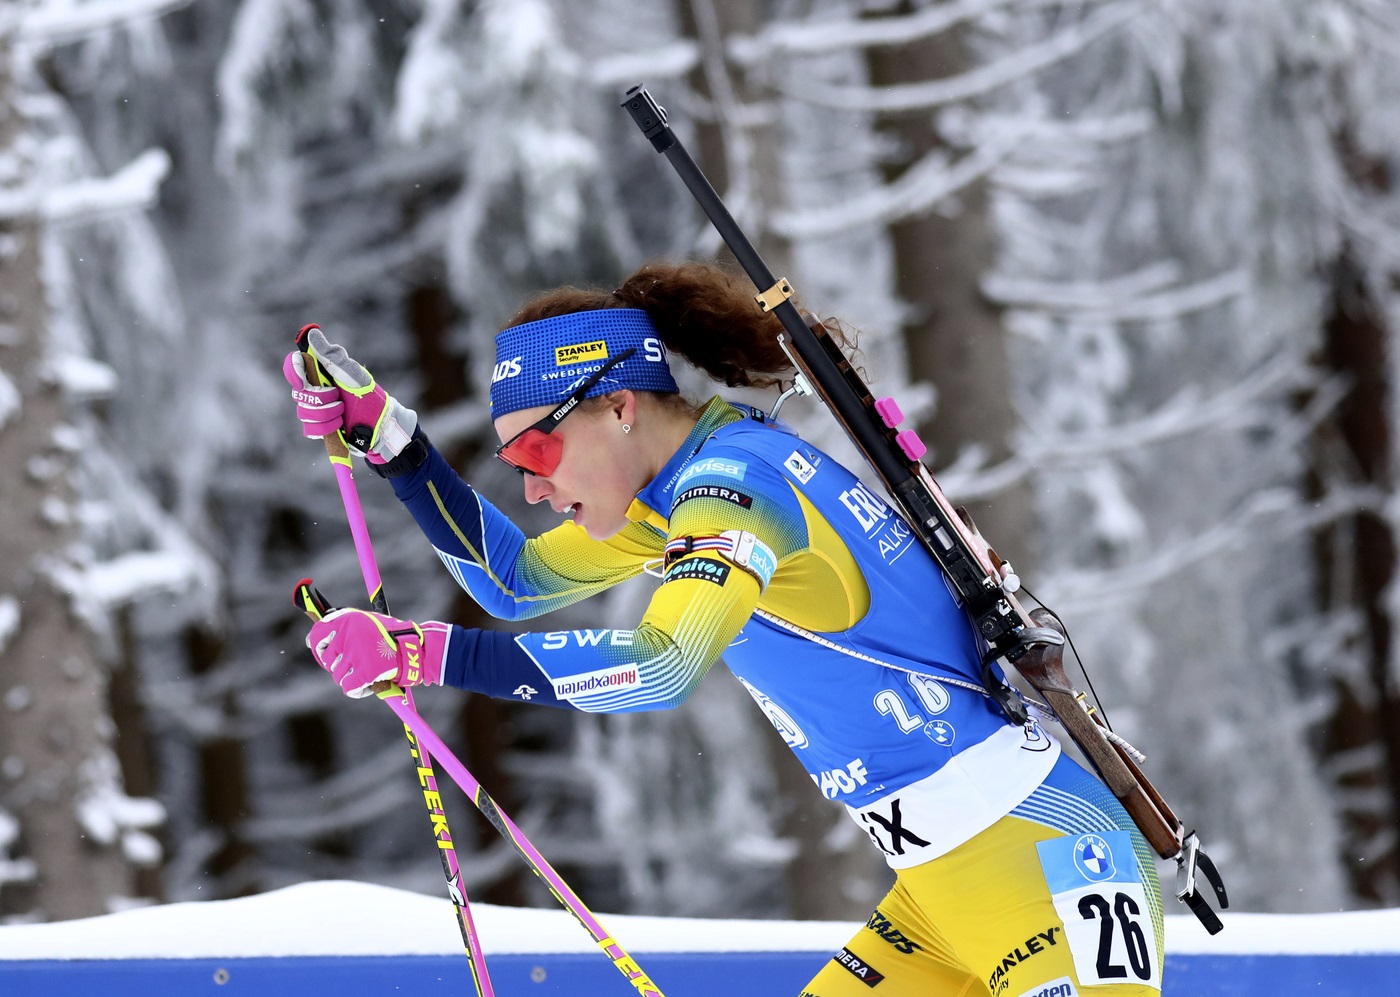 Sweden's Hanna Oeberg runs during the women's 7.5 km sprint race at the Biathlon World Cup in Oberhof, Germany, Friday, Jan. 8, 2021. (AP Photo/Matthias Schrader)